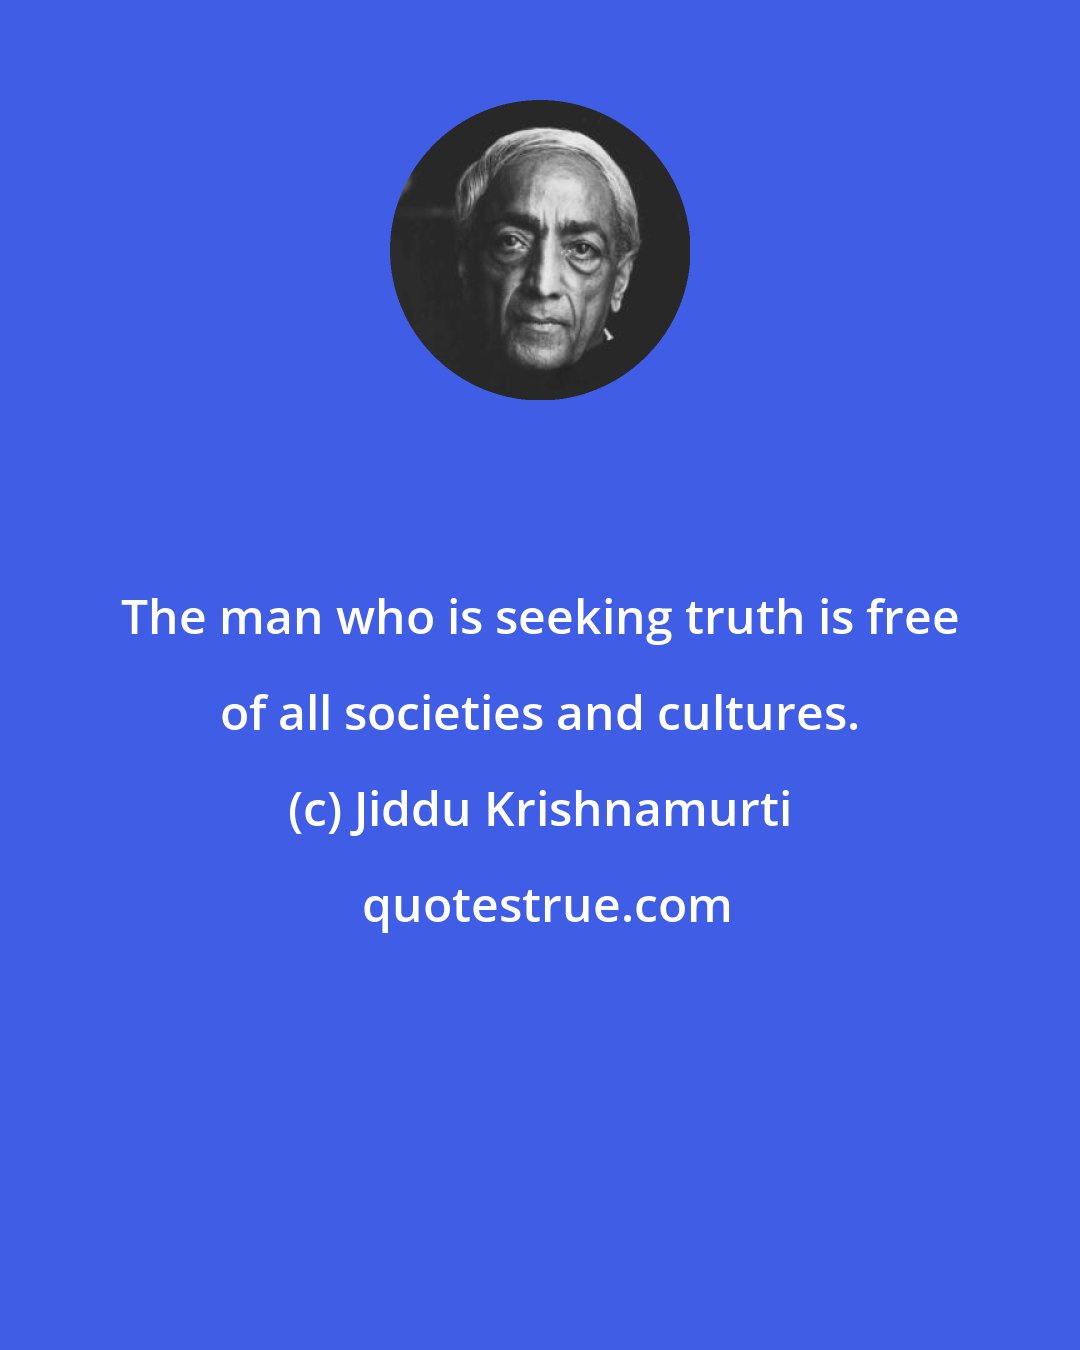 Jiddu Krishnamurti: The man who is seeking truth is free of all societies and cultures.